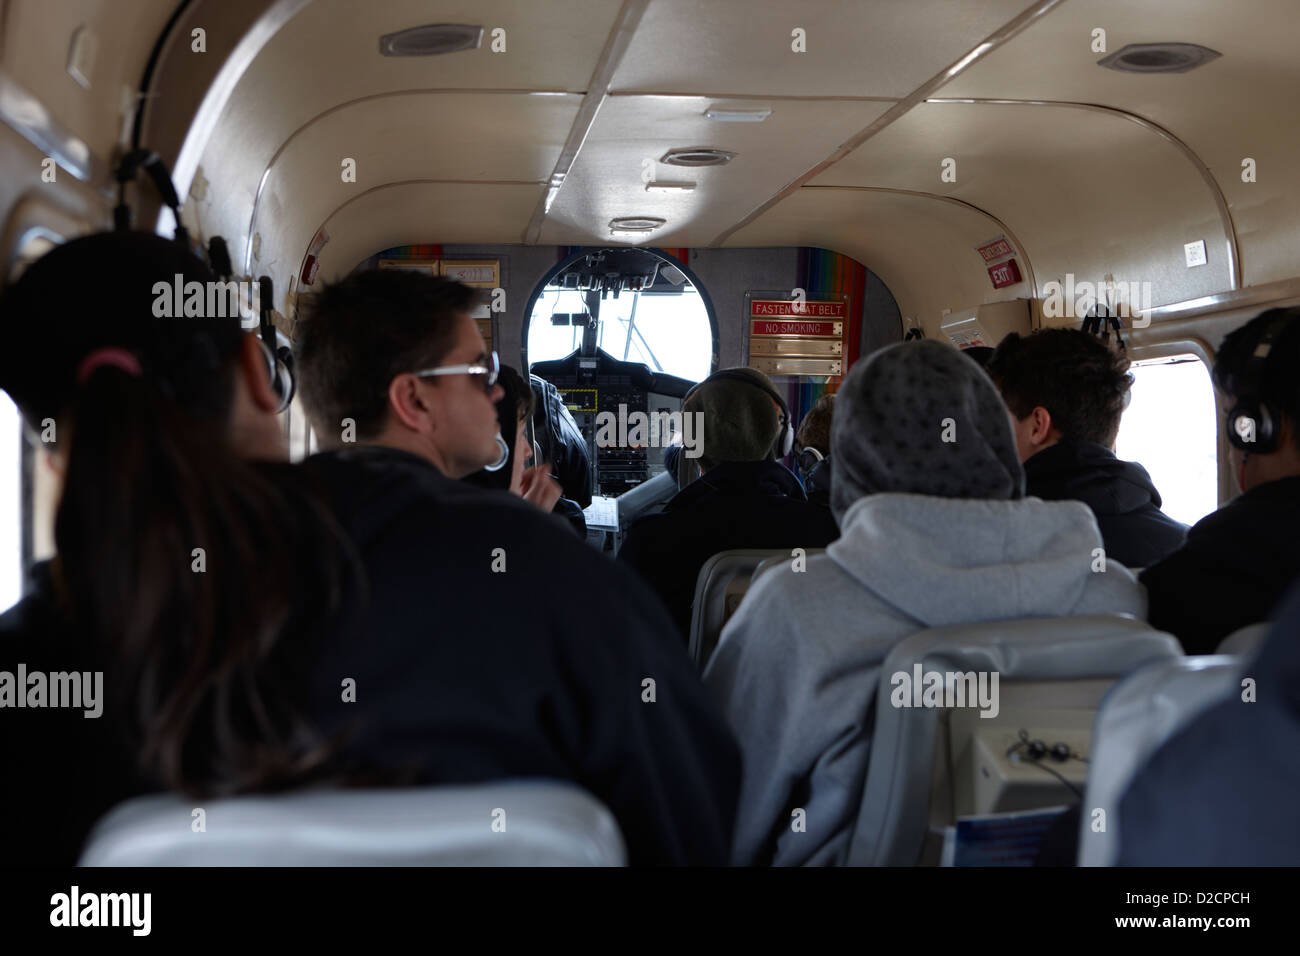 passengers on board dehaviland twin otter light aircraft sightseeing flight to grand canyon Stock Photo